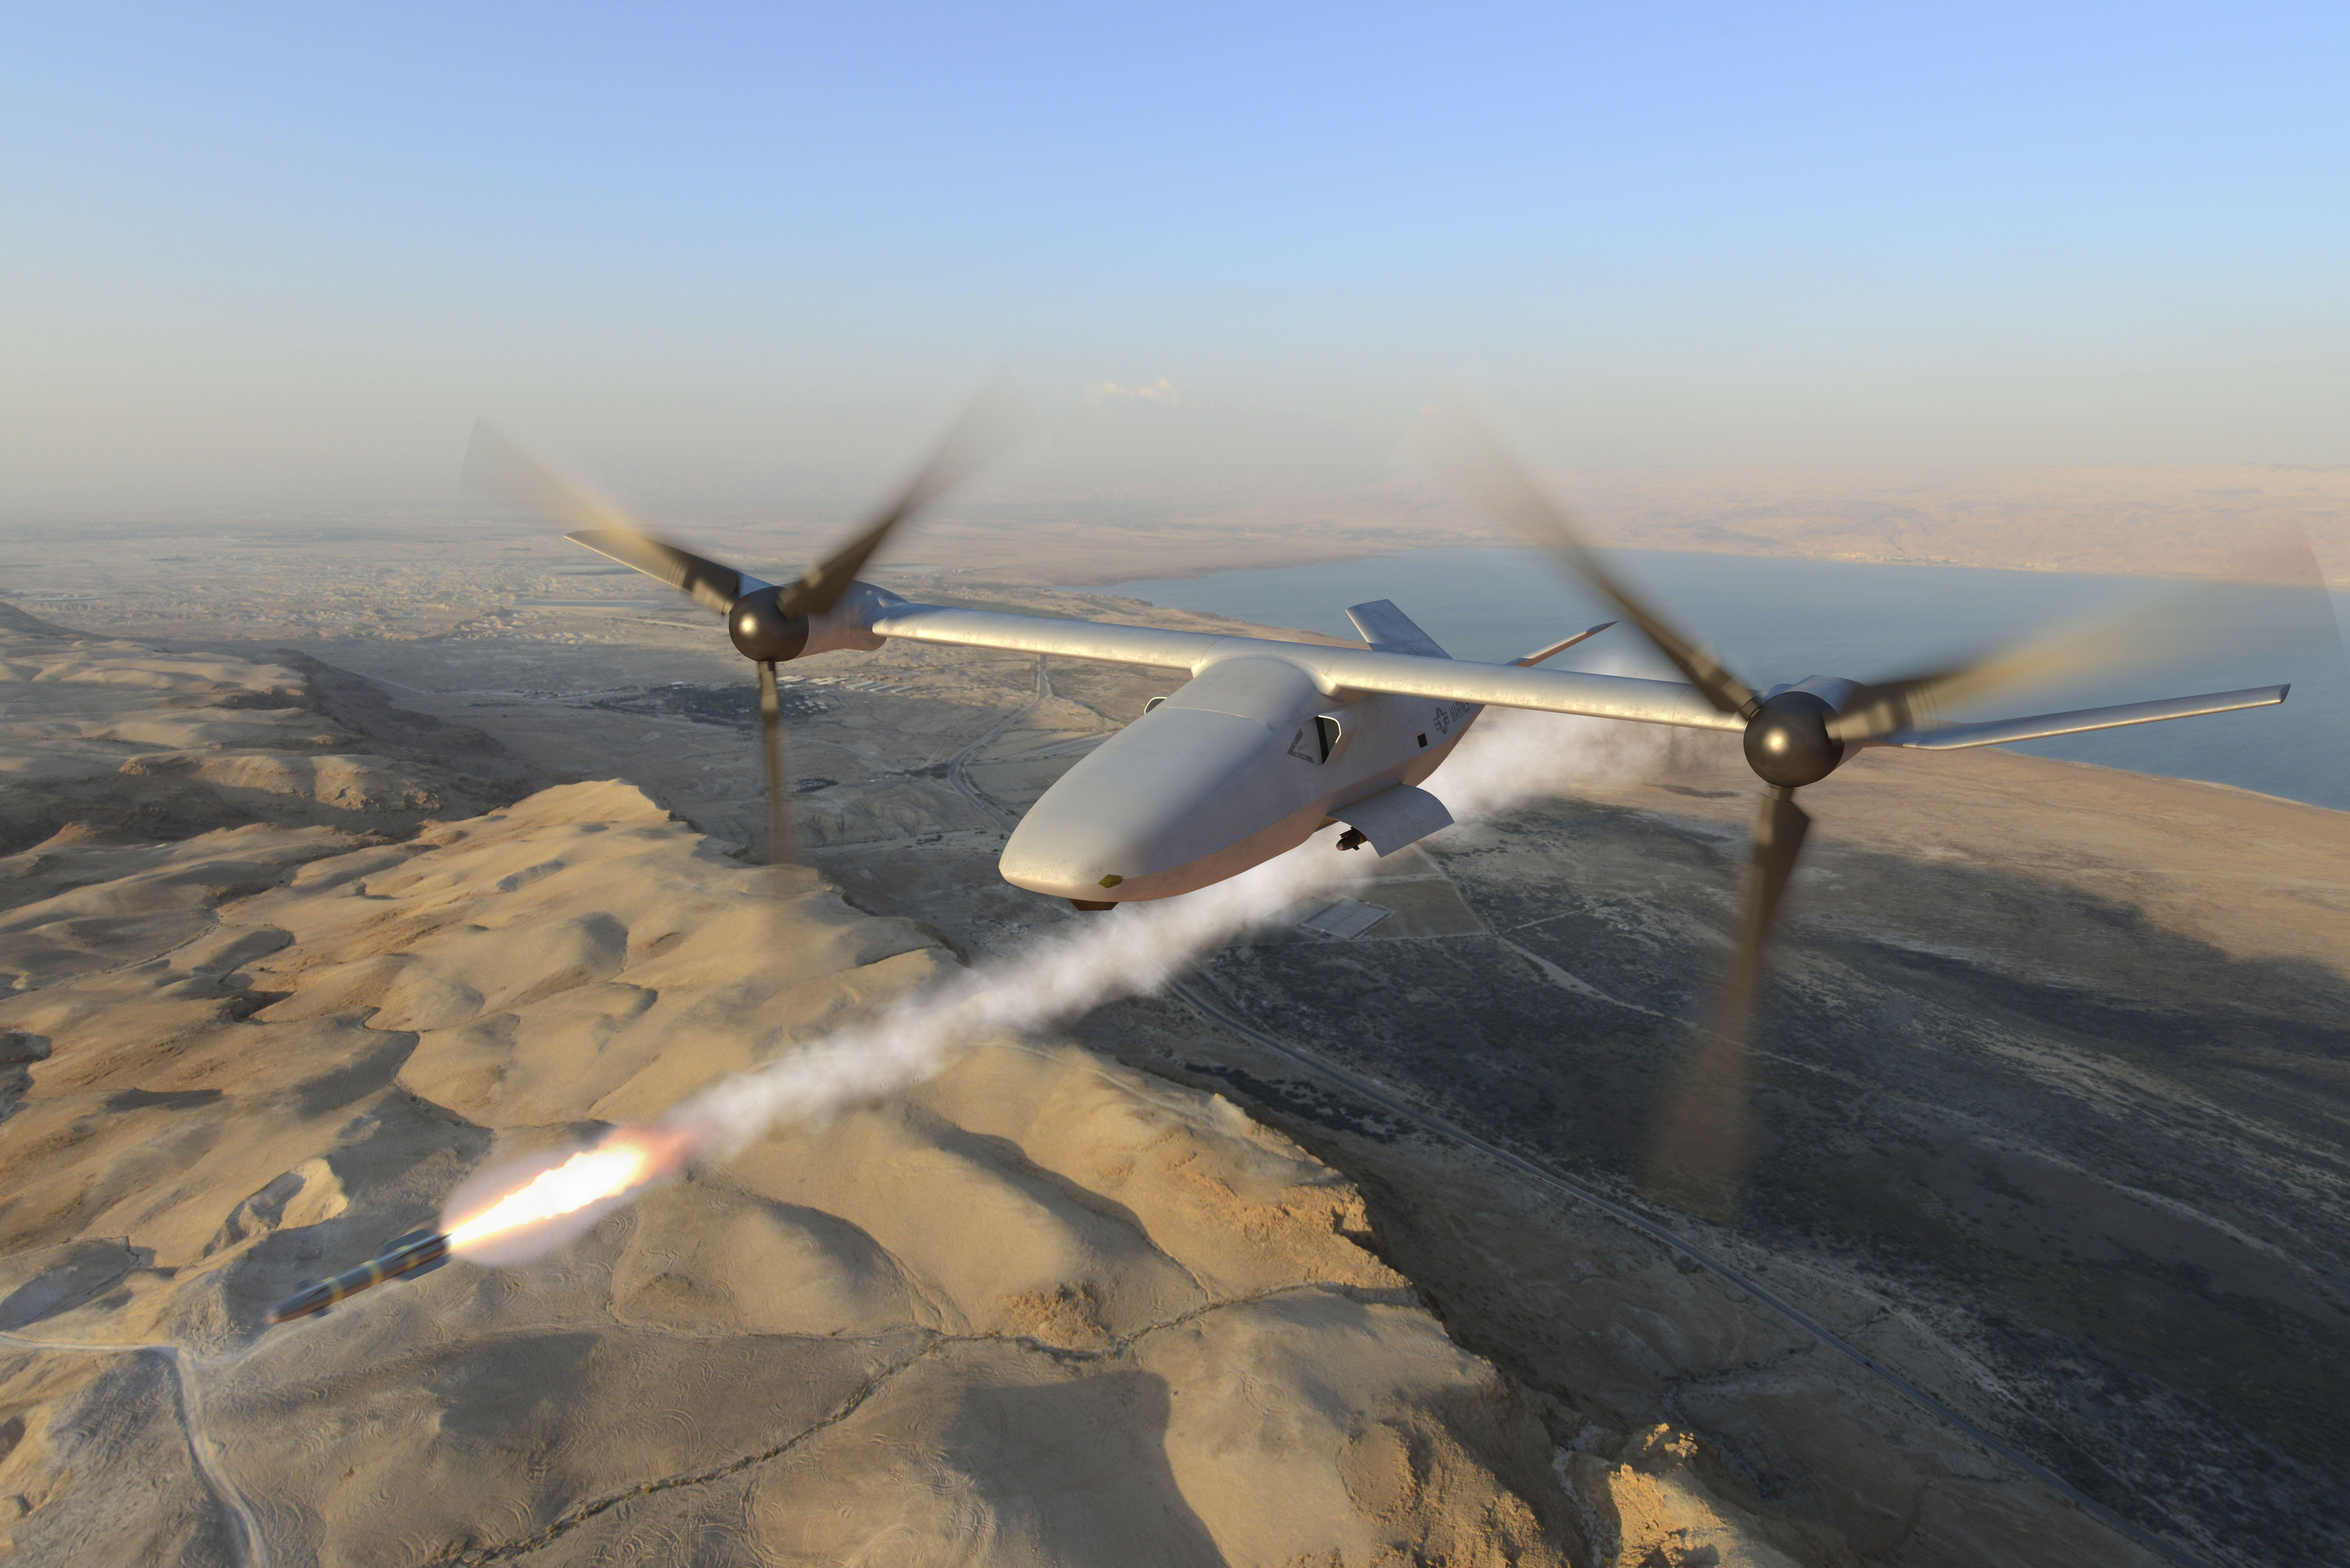 V 22 Osprey Drone: The V-22 Osprey Drone in Military Operations